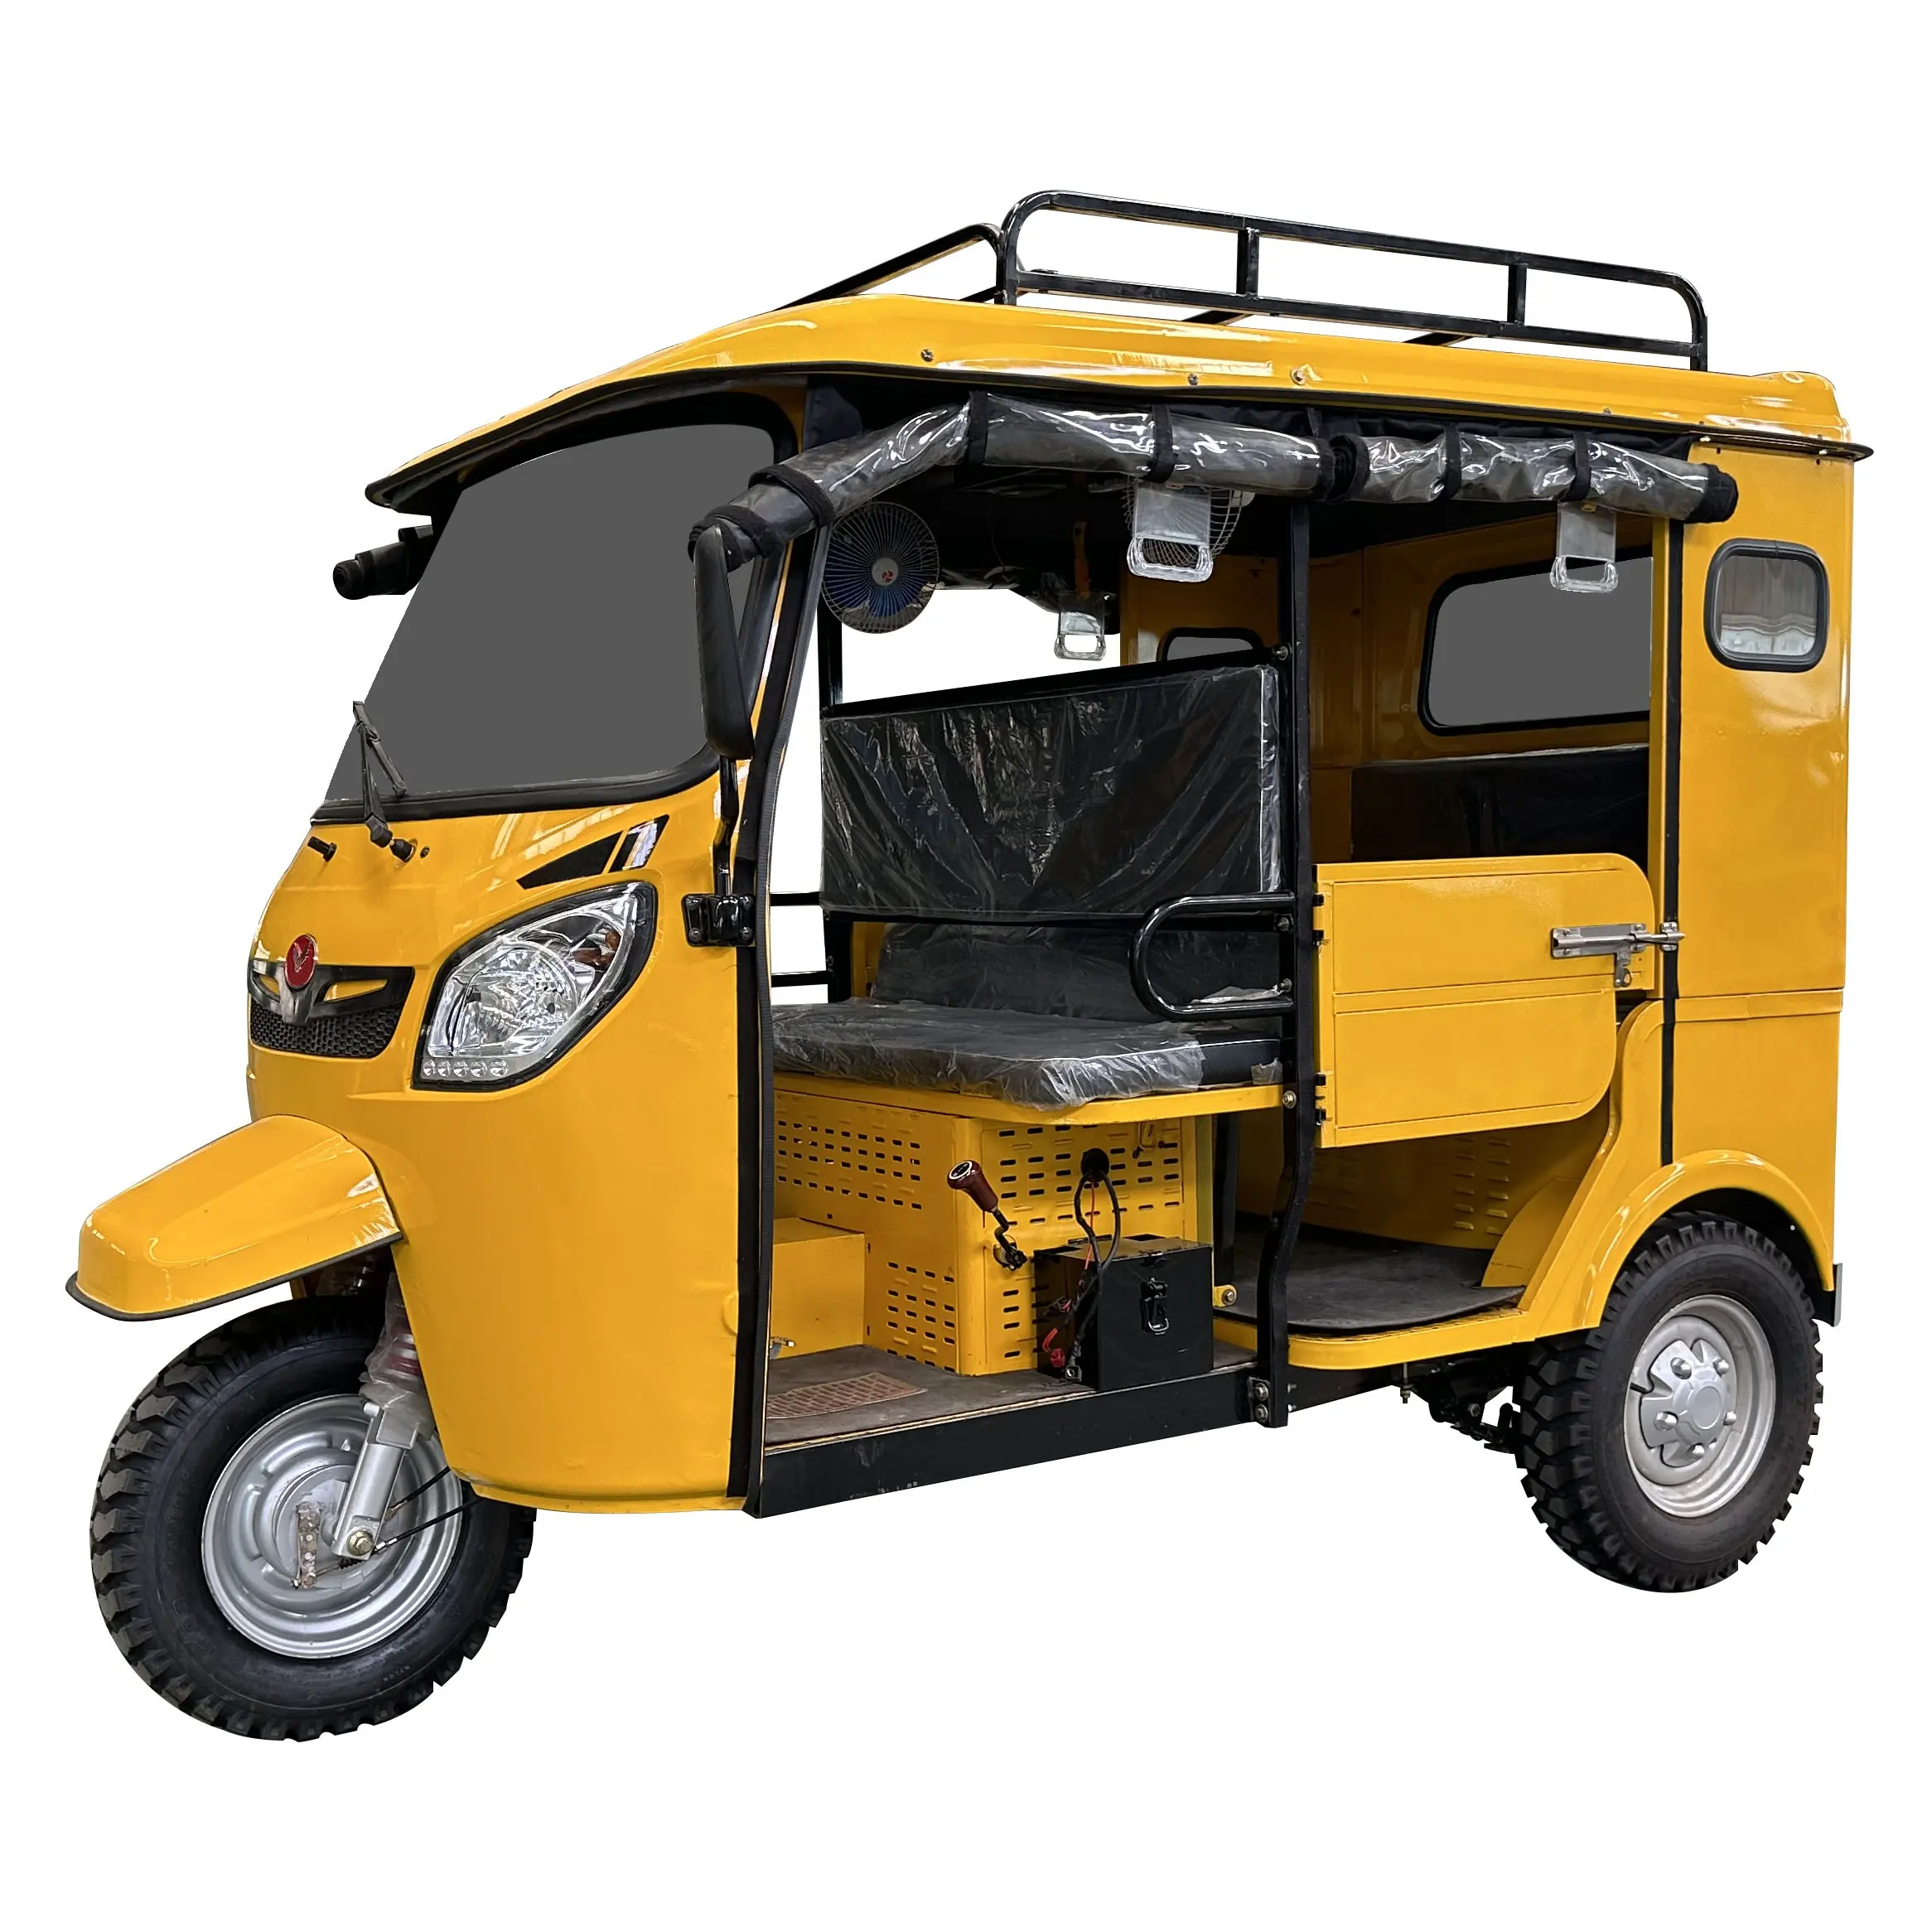 200CC 수냉식 엔진 Pedicab 가솔린 인력거 택시 모터 승객/화물 용 세발 자전거